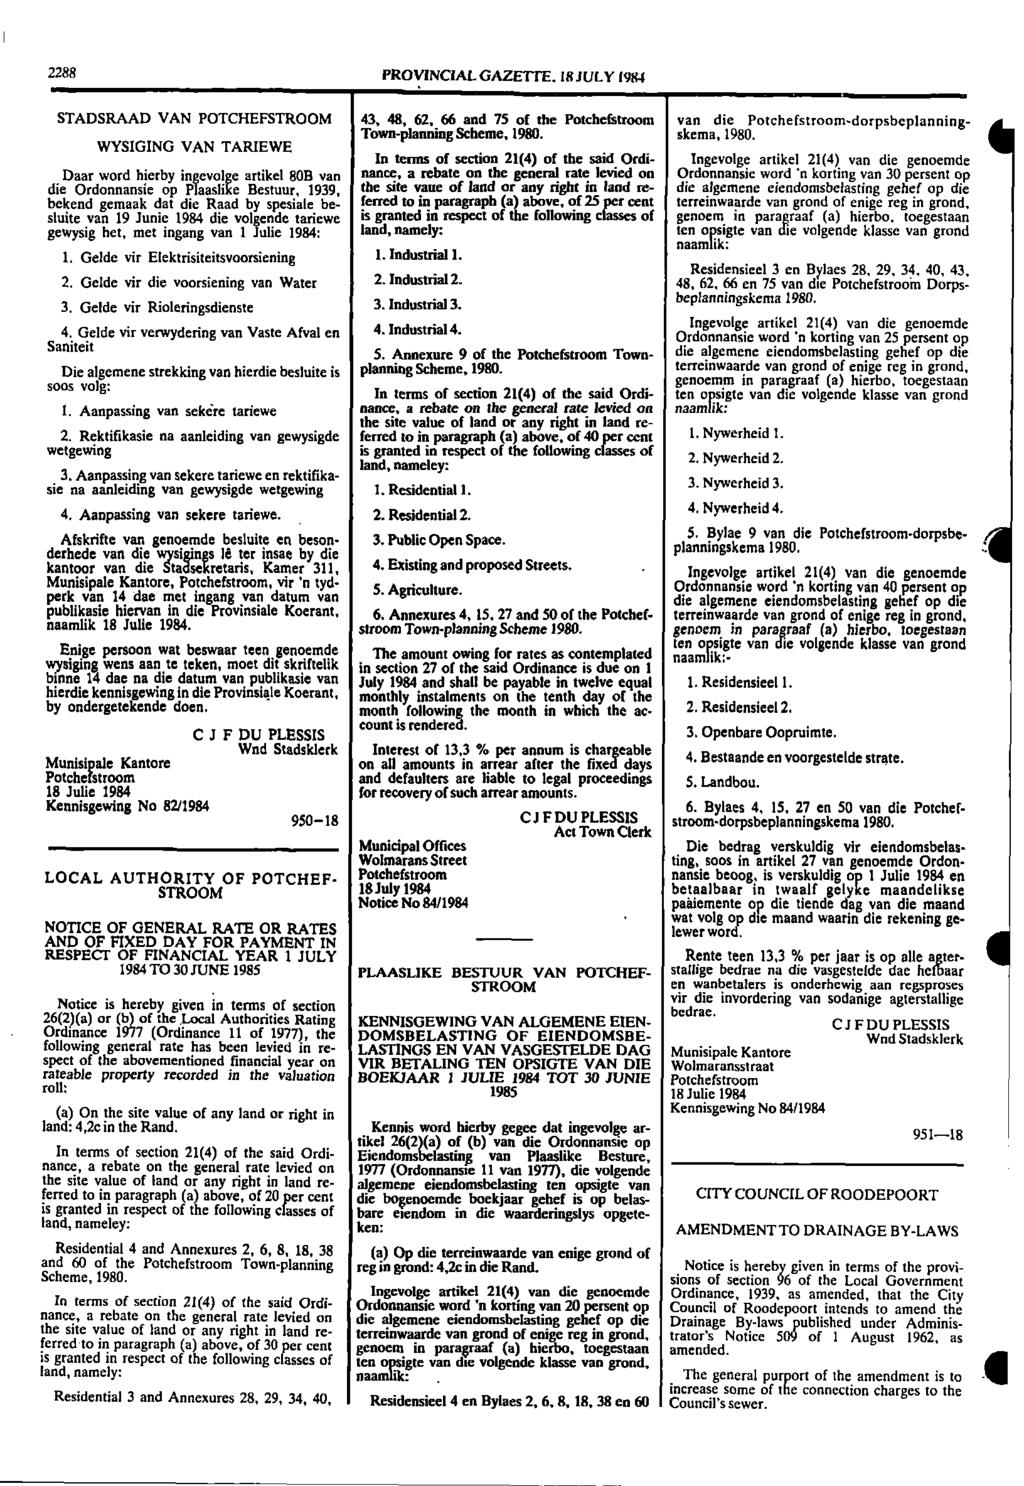 2288 PROVINCIAL GAZETTE. 18 JULY 1981... STADSRAAD VAN POTCHEFSTROOM 43, 48, 62, 66 and 75 of the Potchefstroom van die Potchefstroomdorpsbeplanning Townplanning Scheme, 1980. skema, 1980.